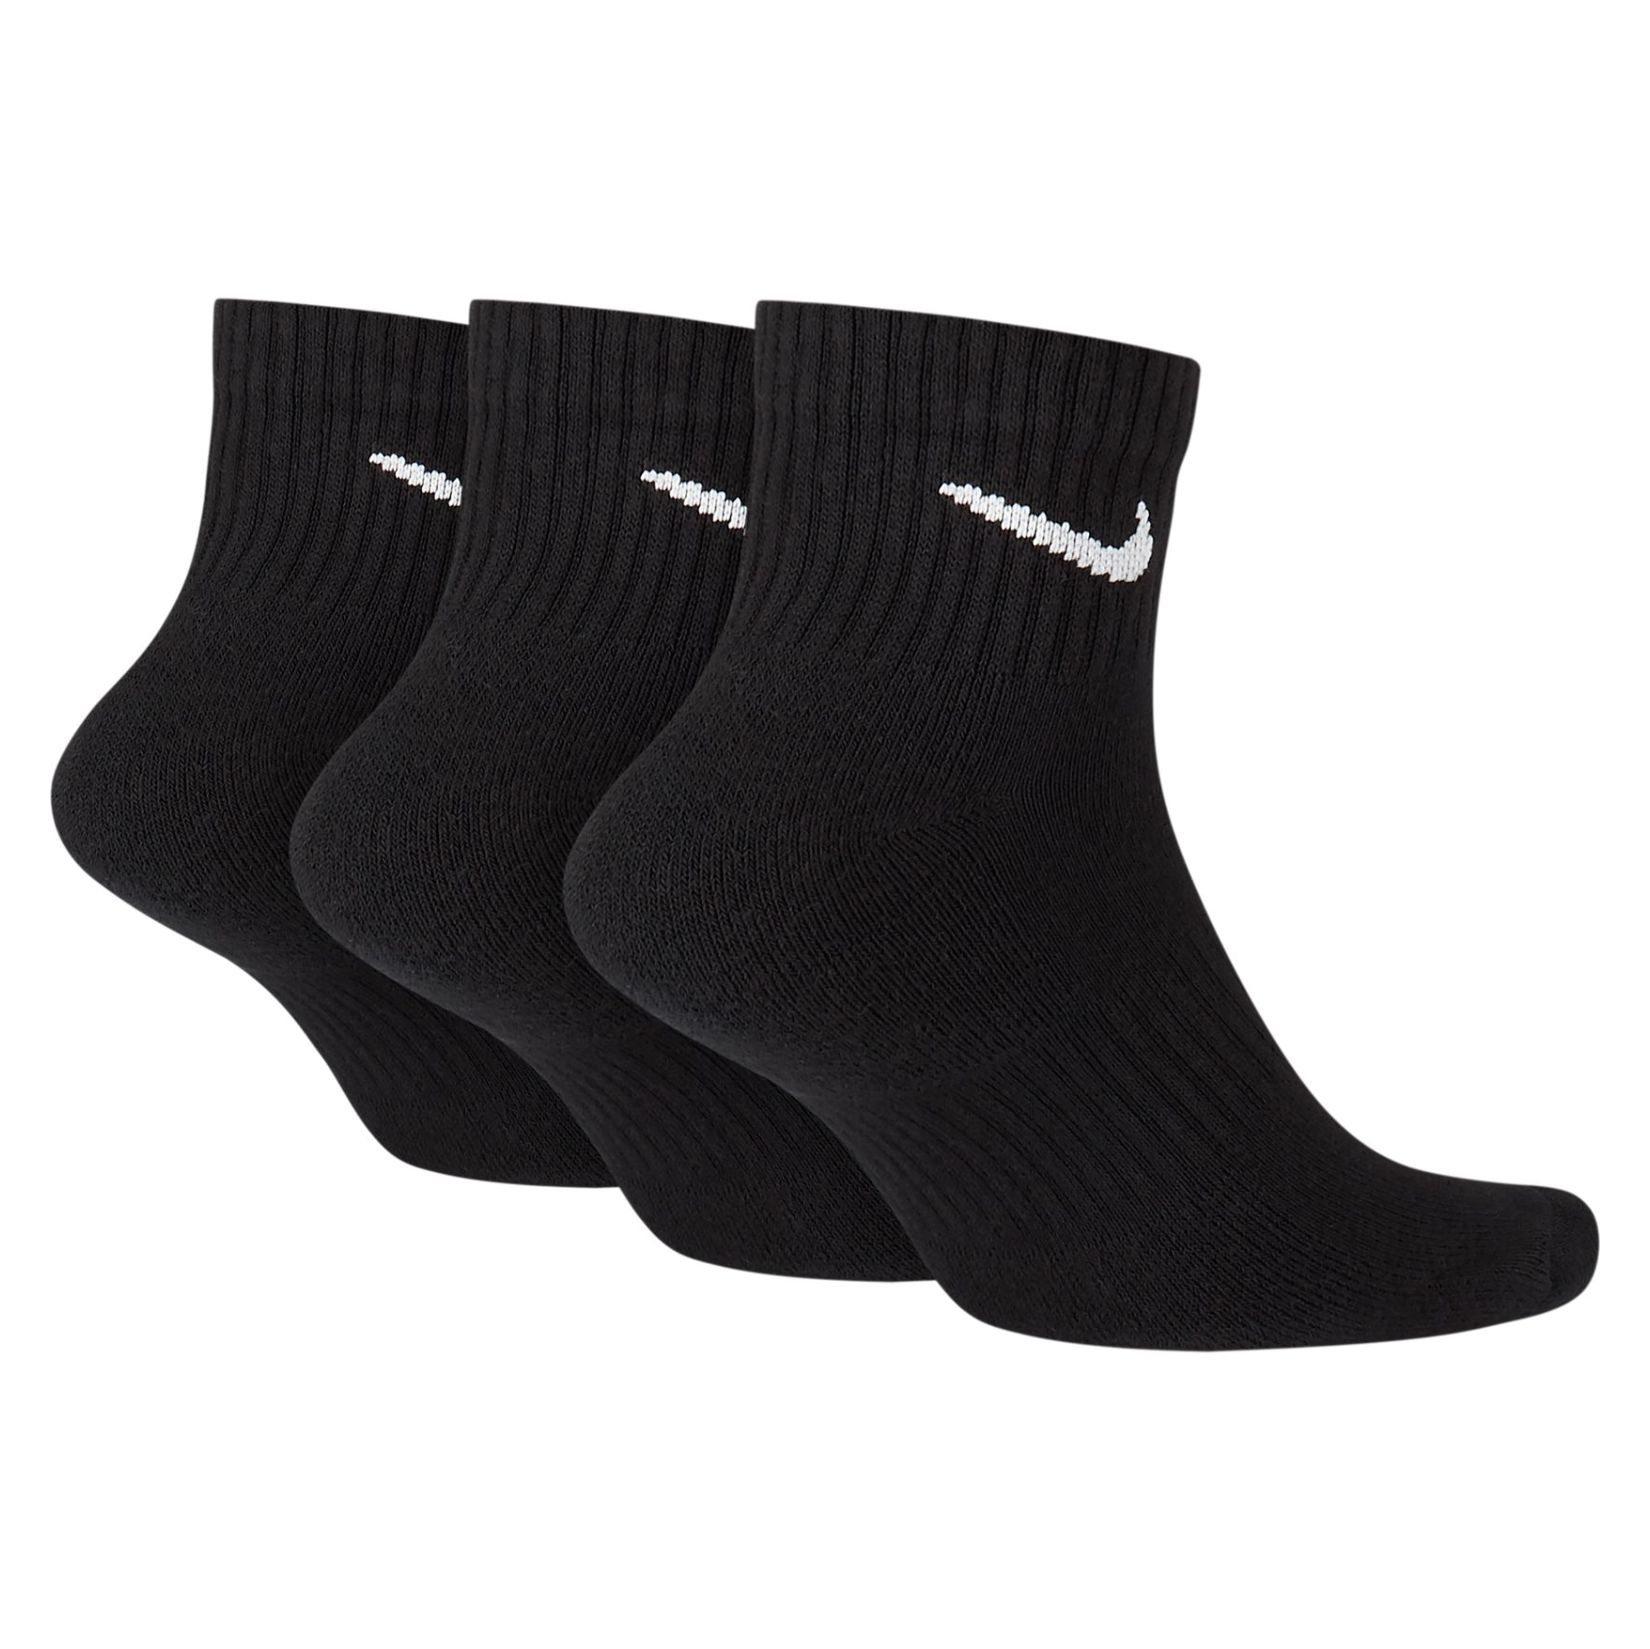 Nike Everyday Cushion Ankle Training Socks (3 Pair)